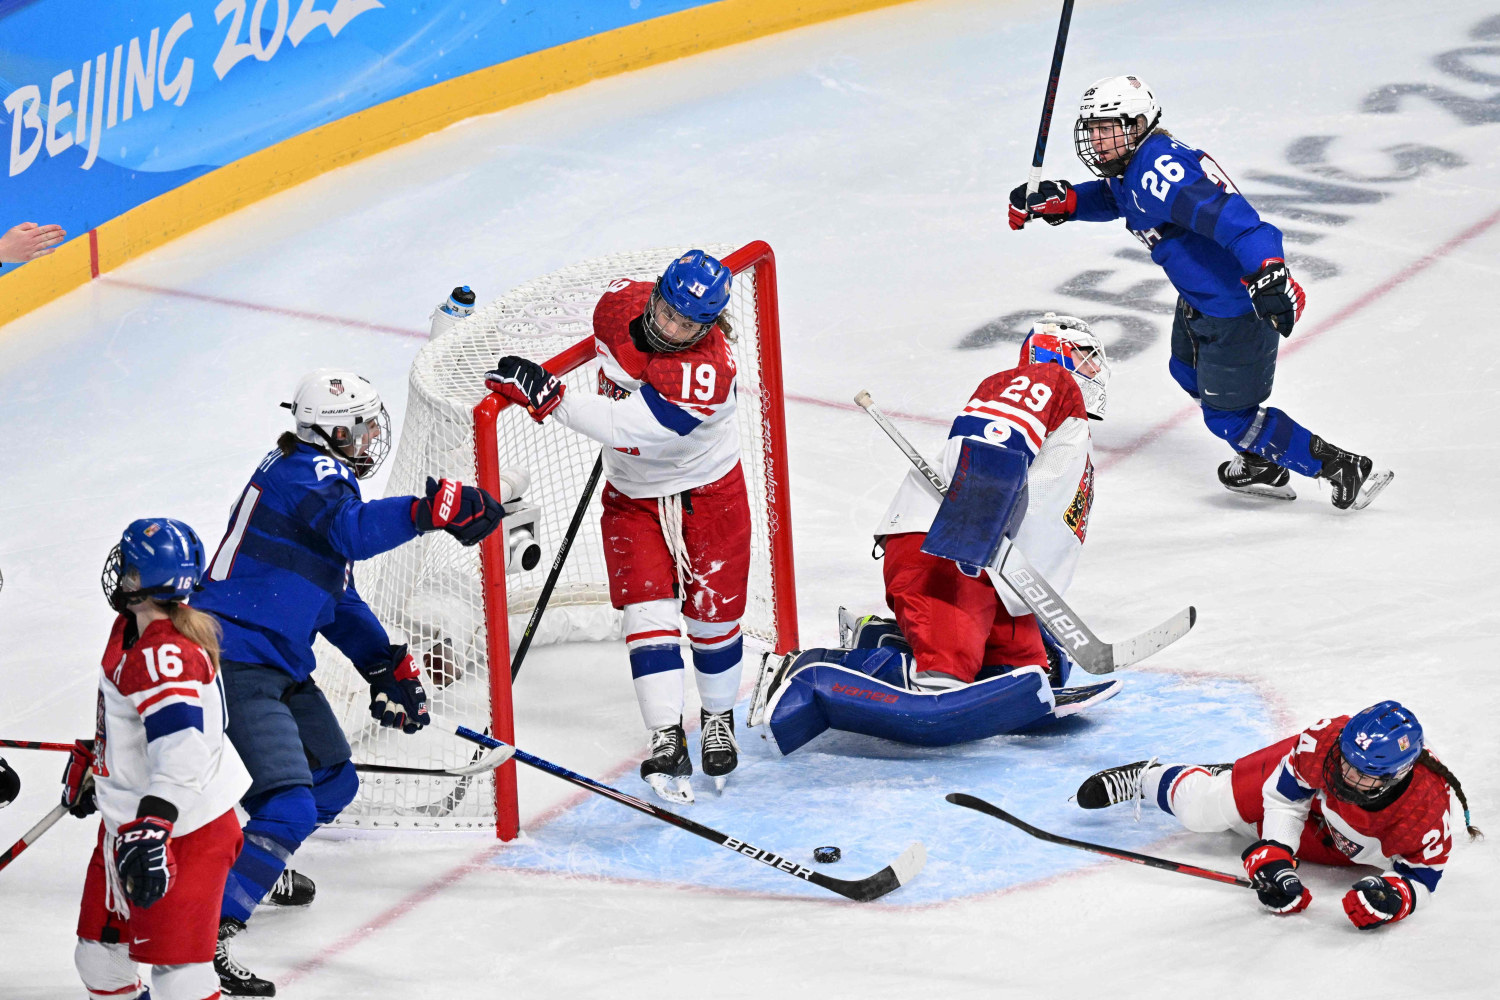 EA SPORTS NHL on X: Scoreacek snipes one for Team Czech Republic